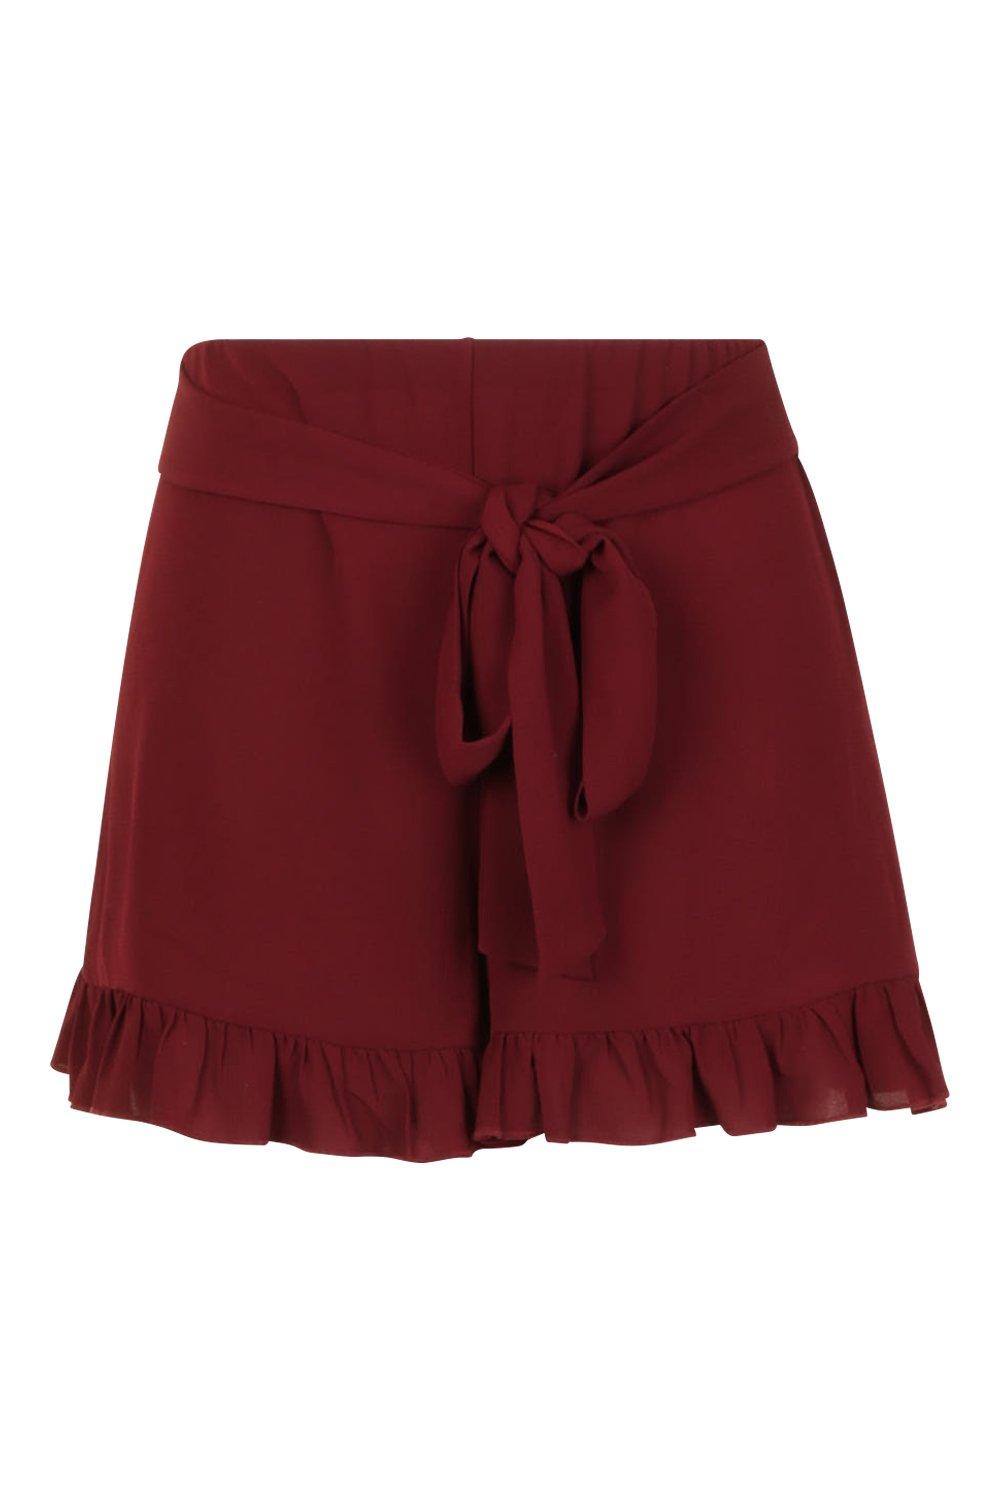 Floral Jersey Knit Flowy Shorts